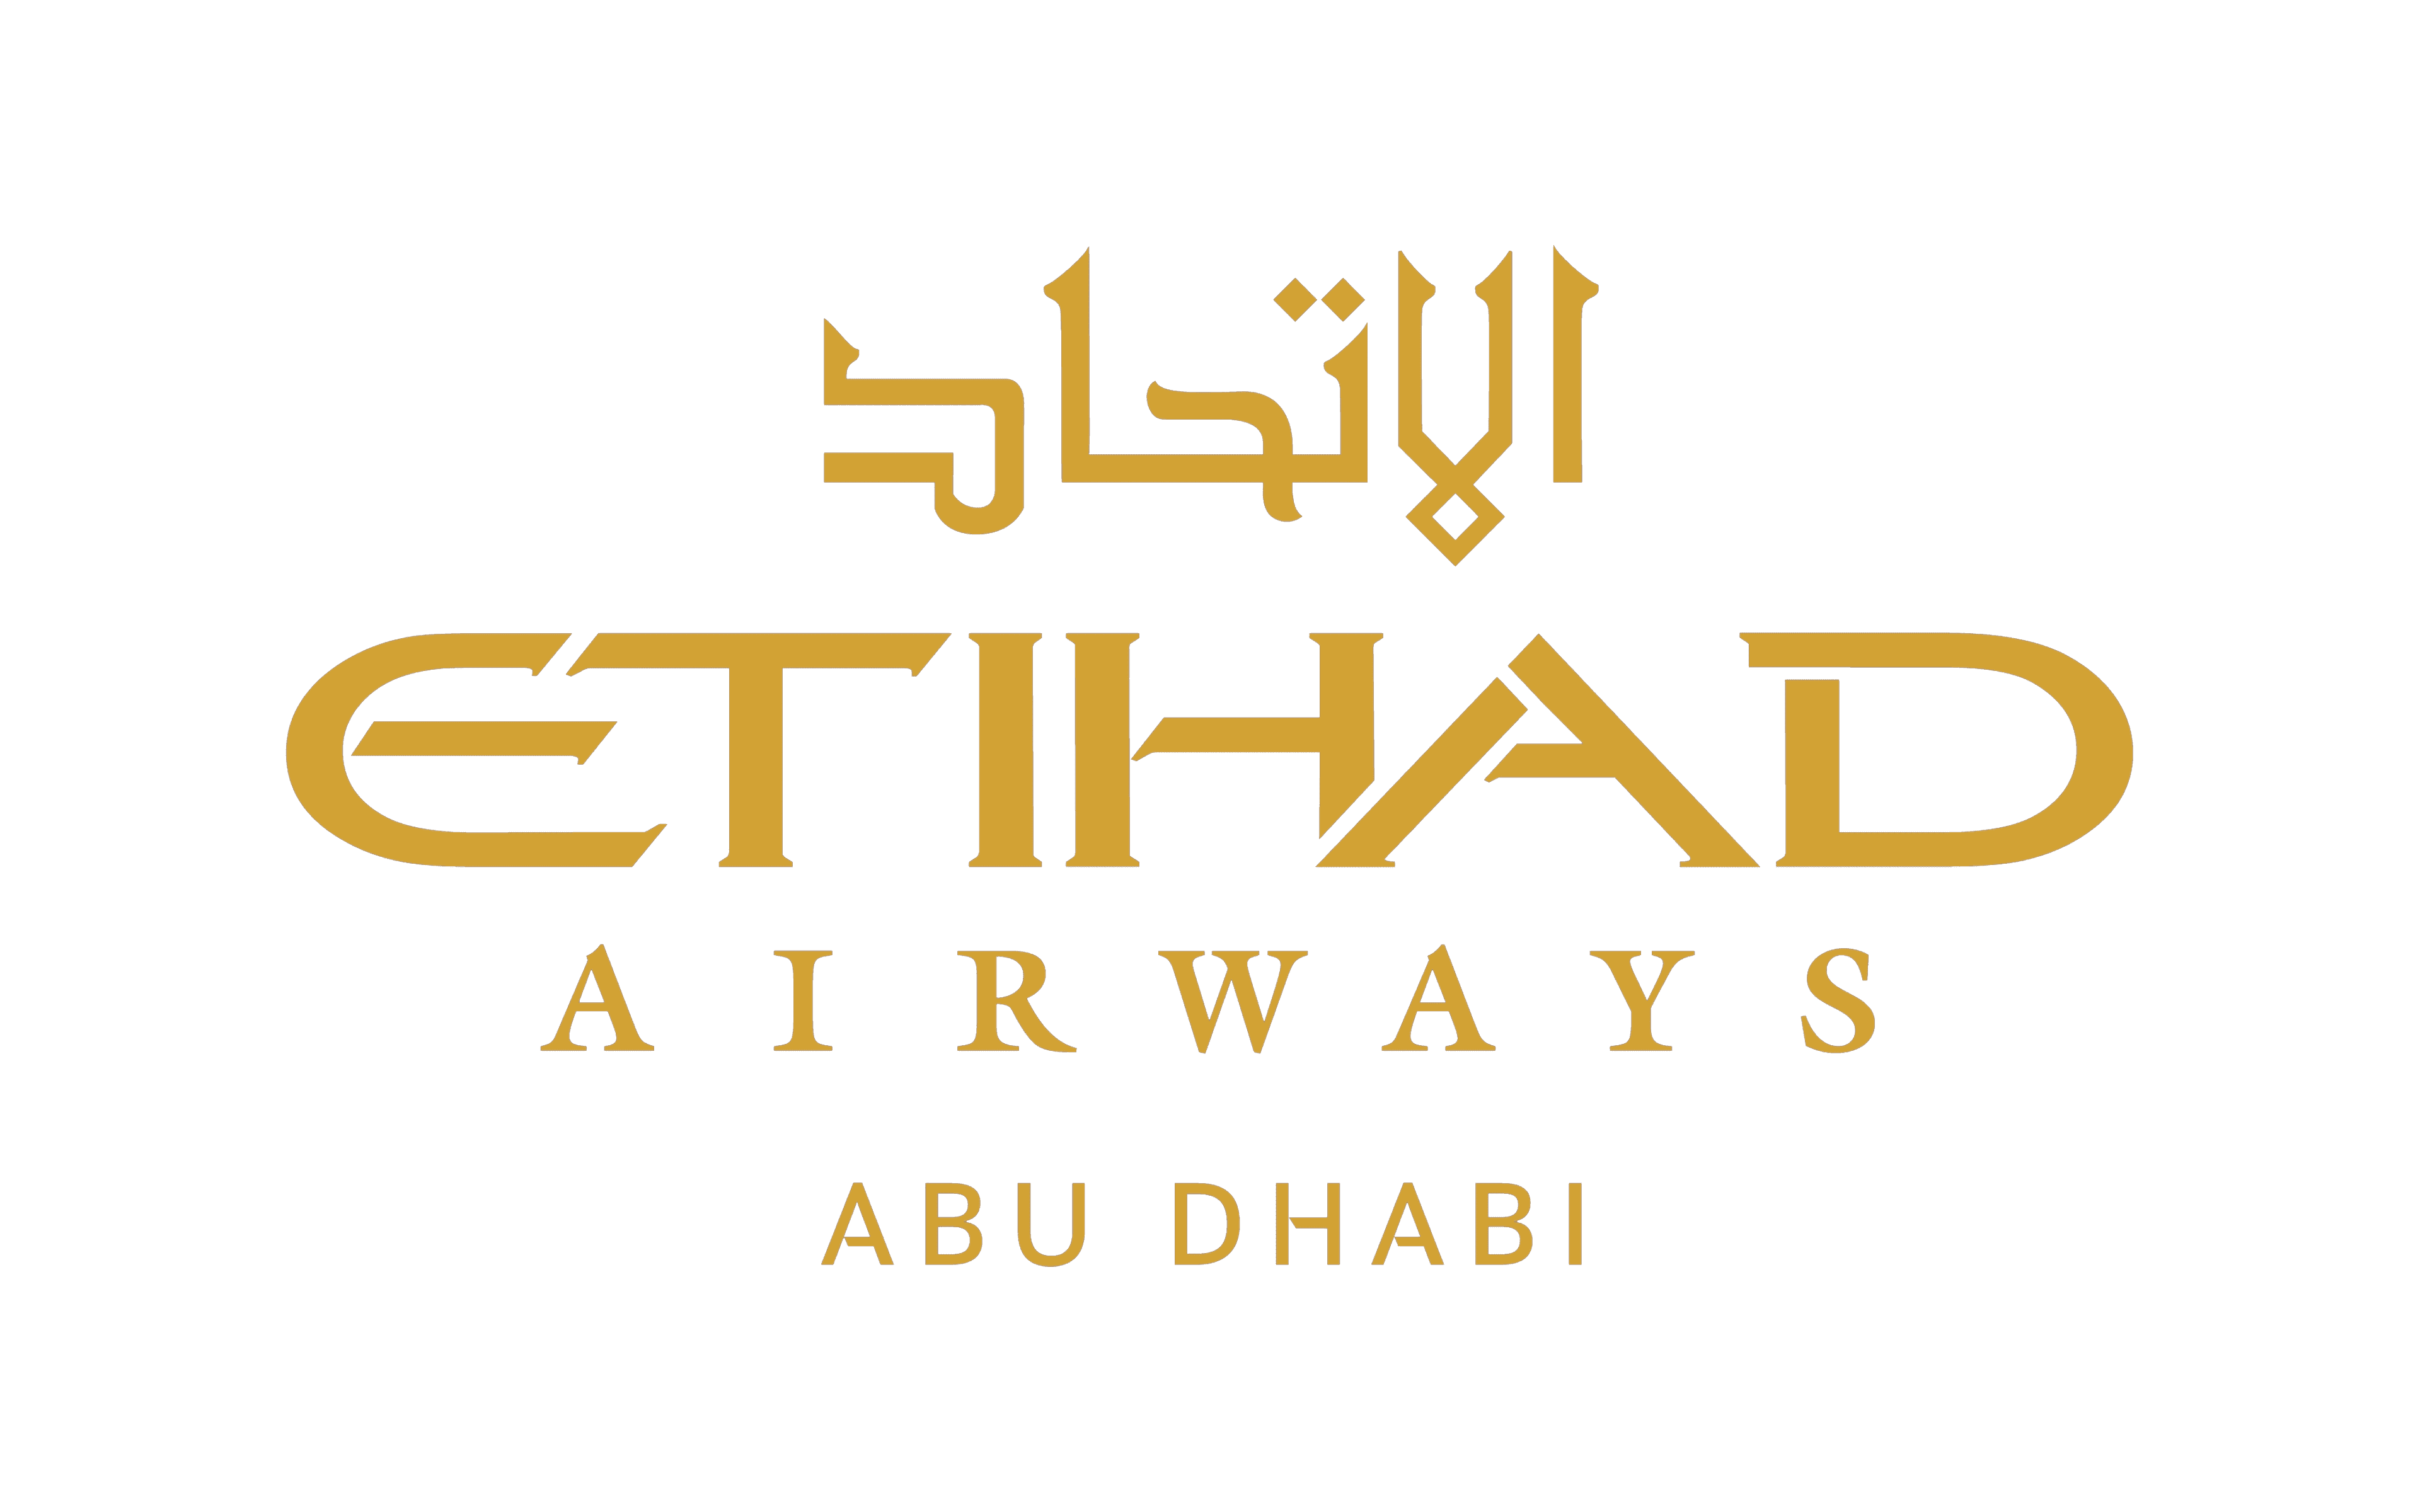 etihad airways for travel agents